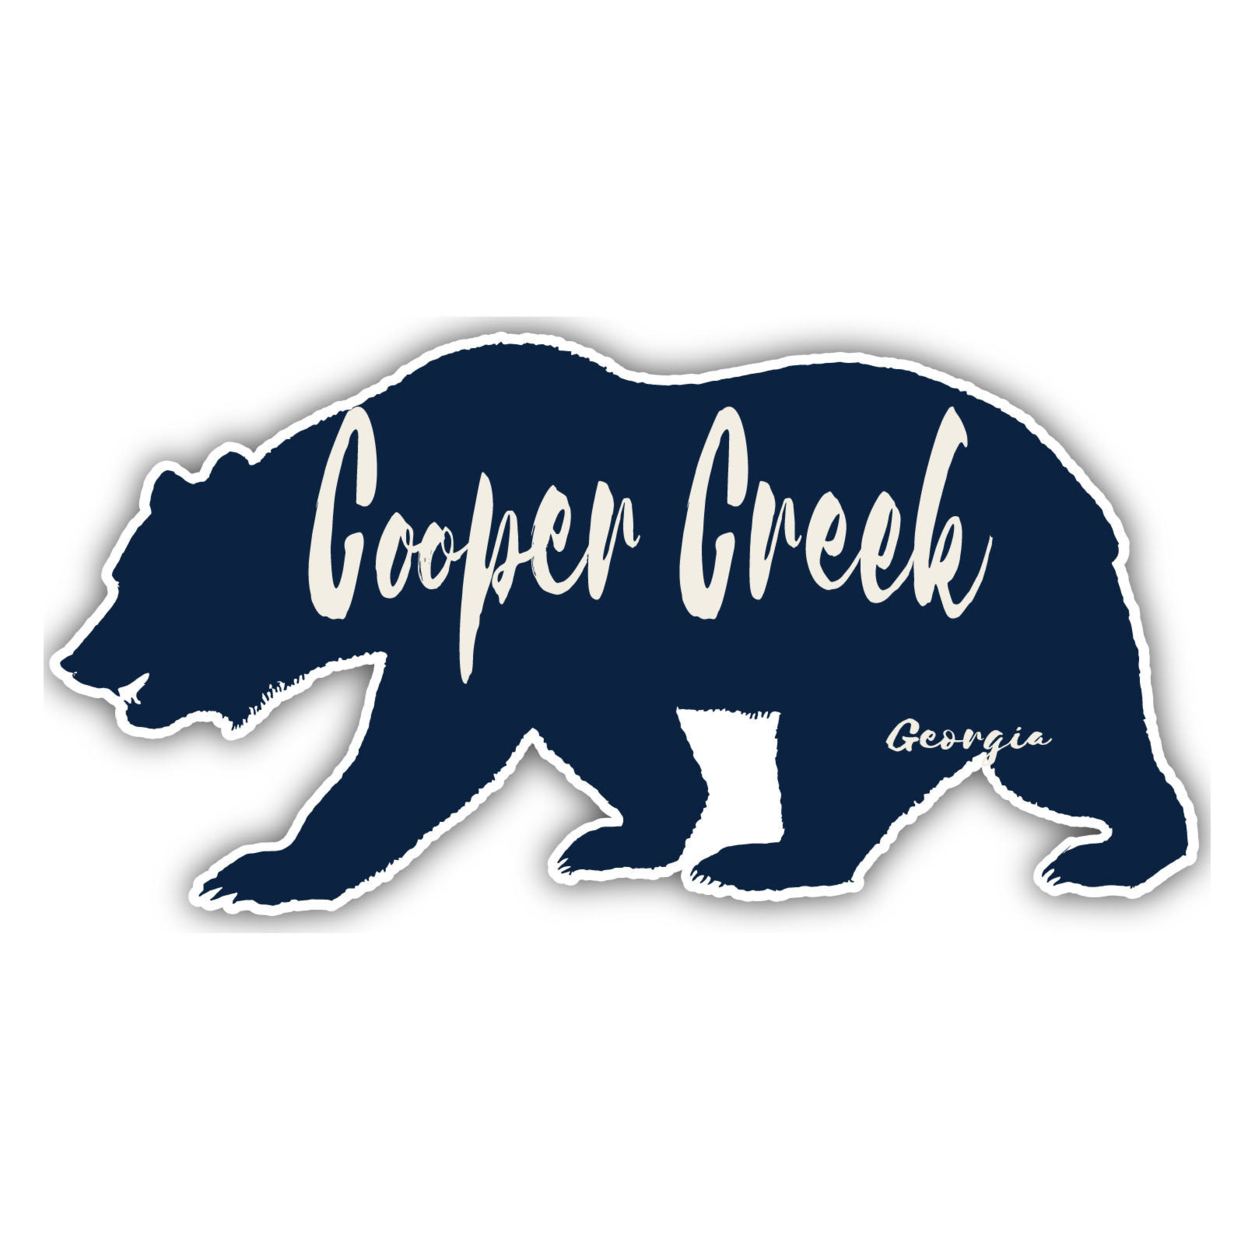 Cooper Creek Georgia Souvenir Decorative Stickers (Choose Theme And Size) - 4-Pack, 2-Inch, Bear